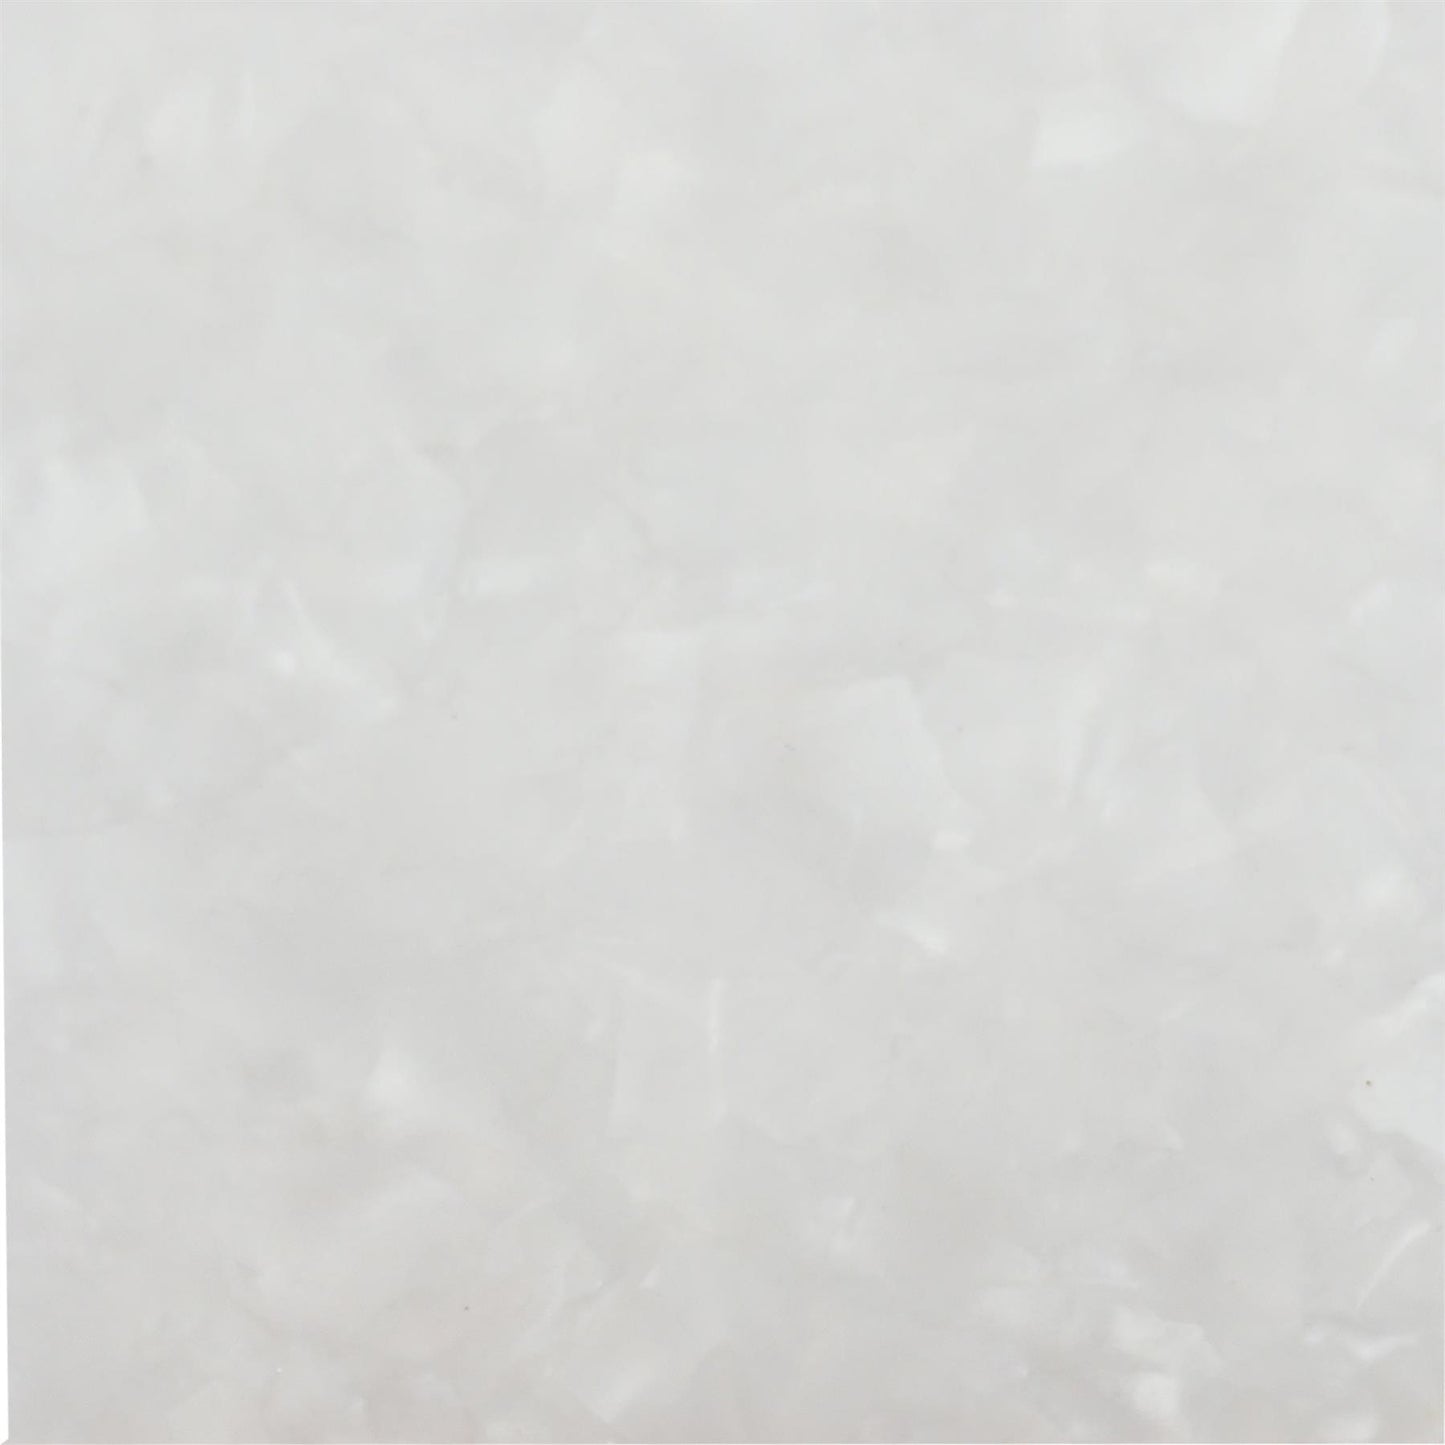 Incudo White Pearloid Acrylic Sheet - 150x125x3mm